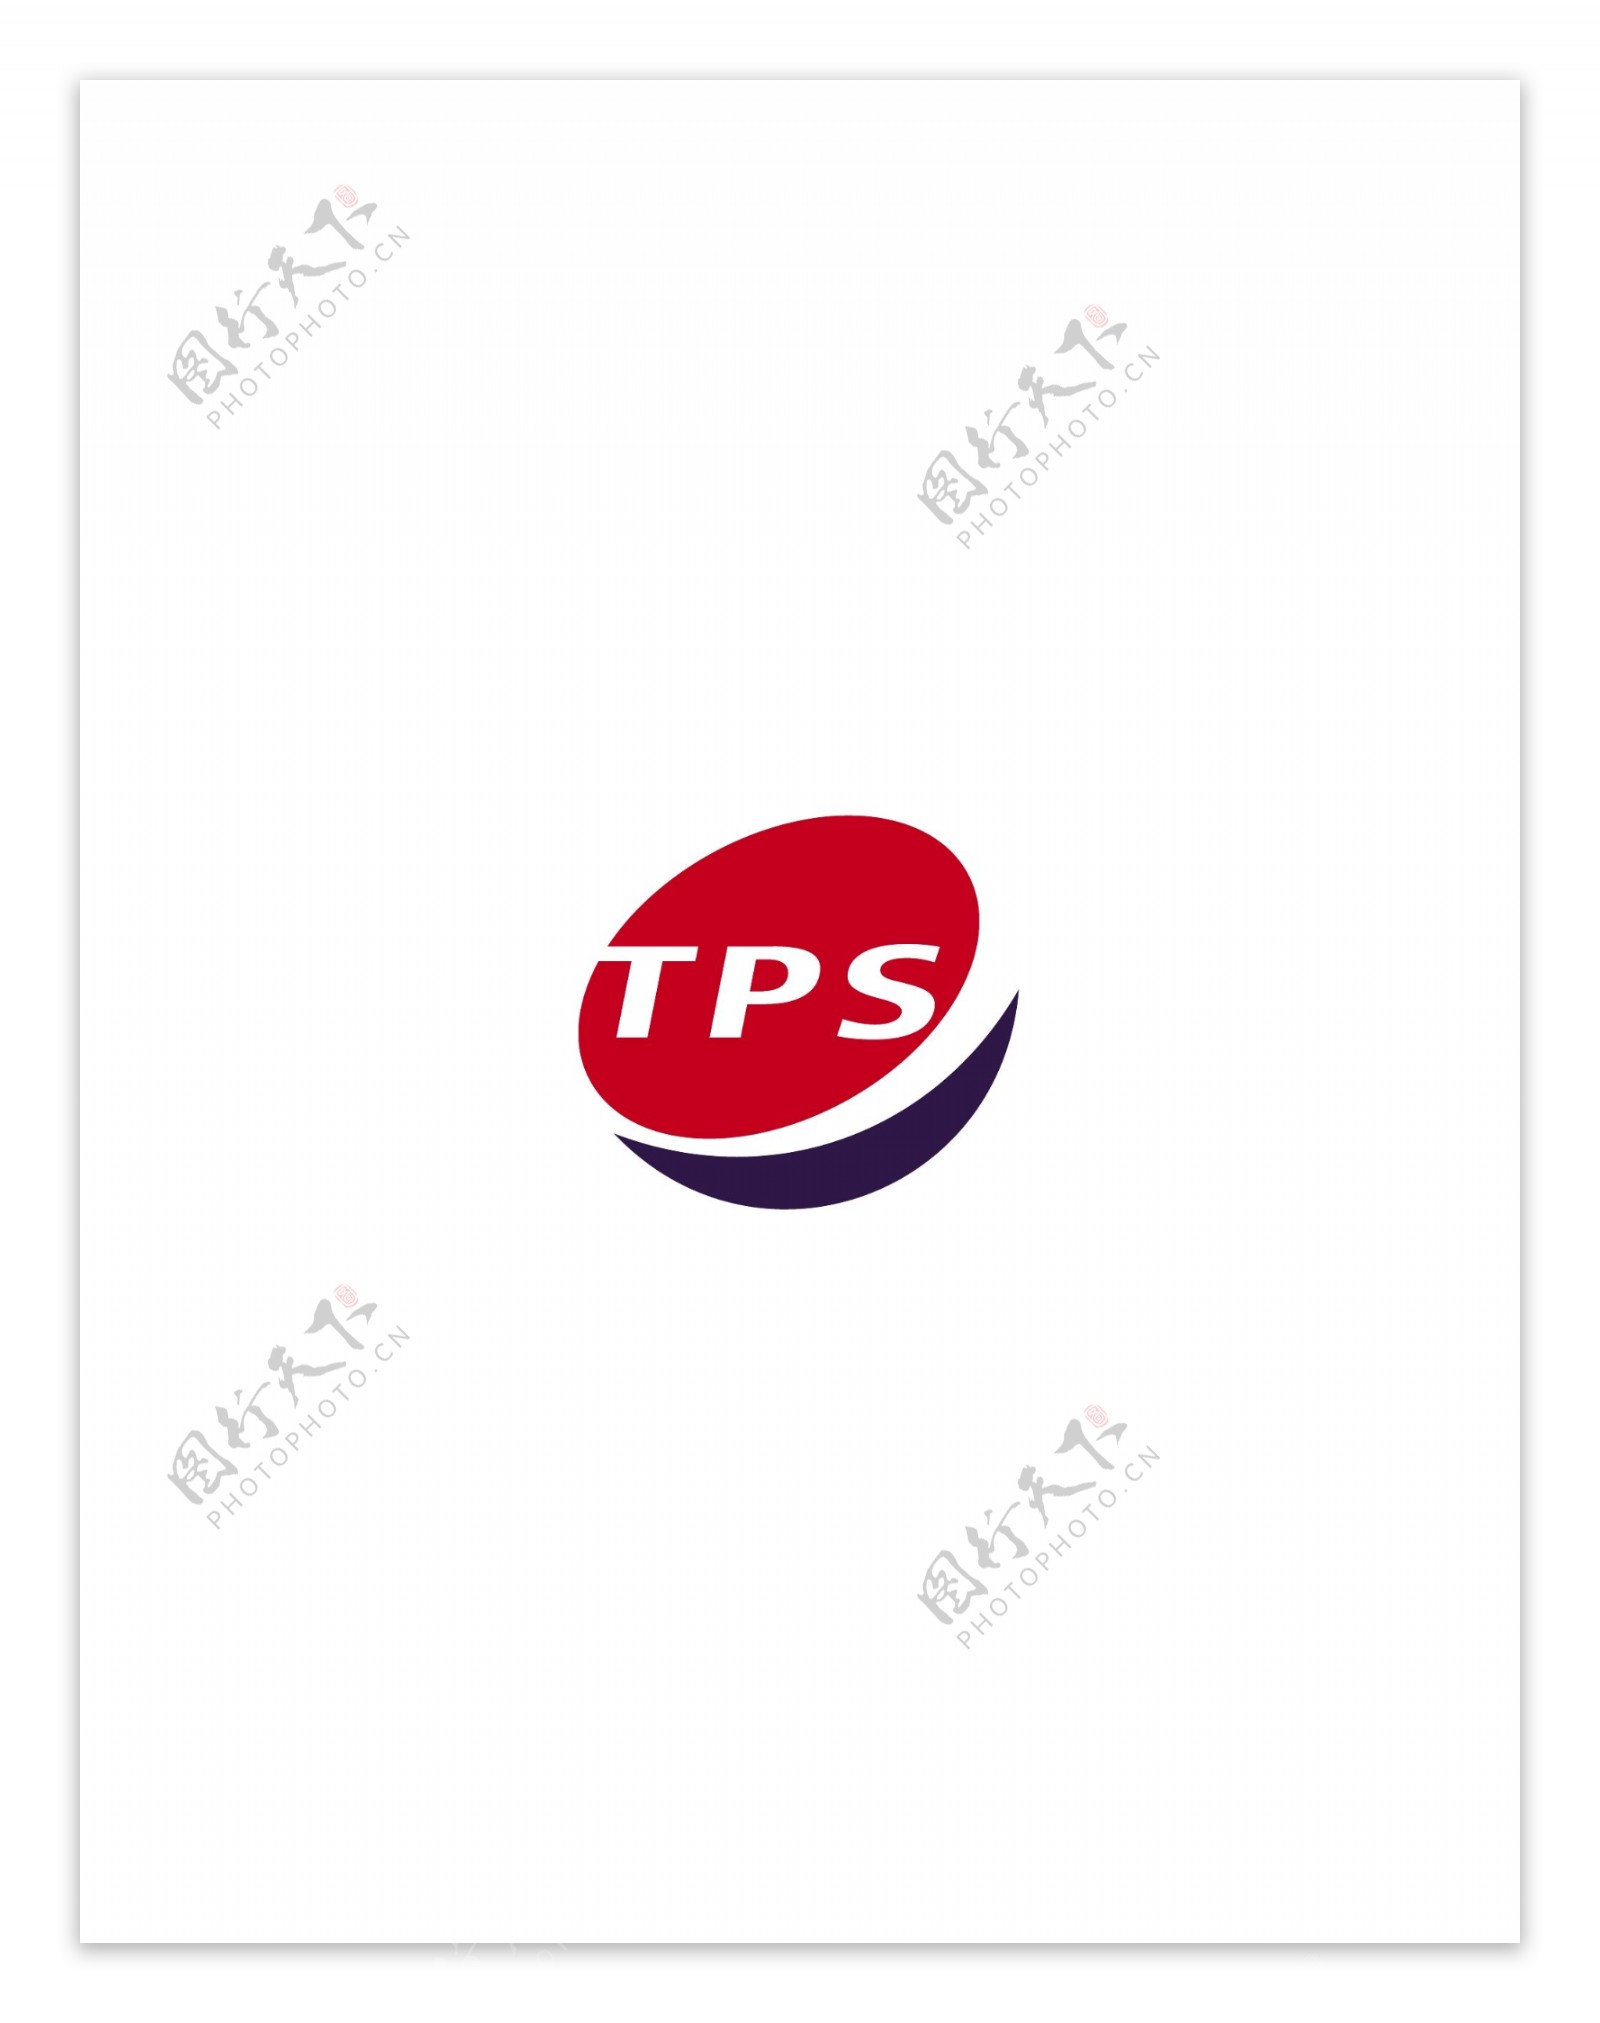 TPSlogo设计欣赏国外知名公司标志范例TPS下载标志设计欣赏